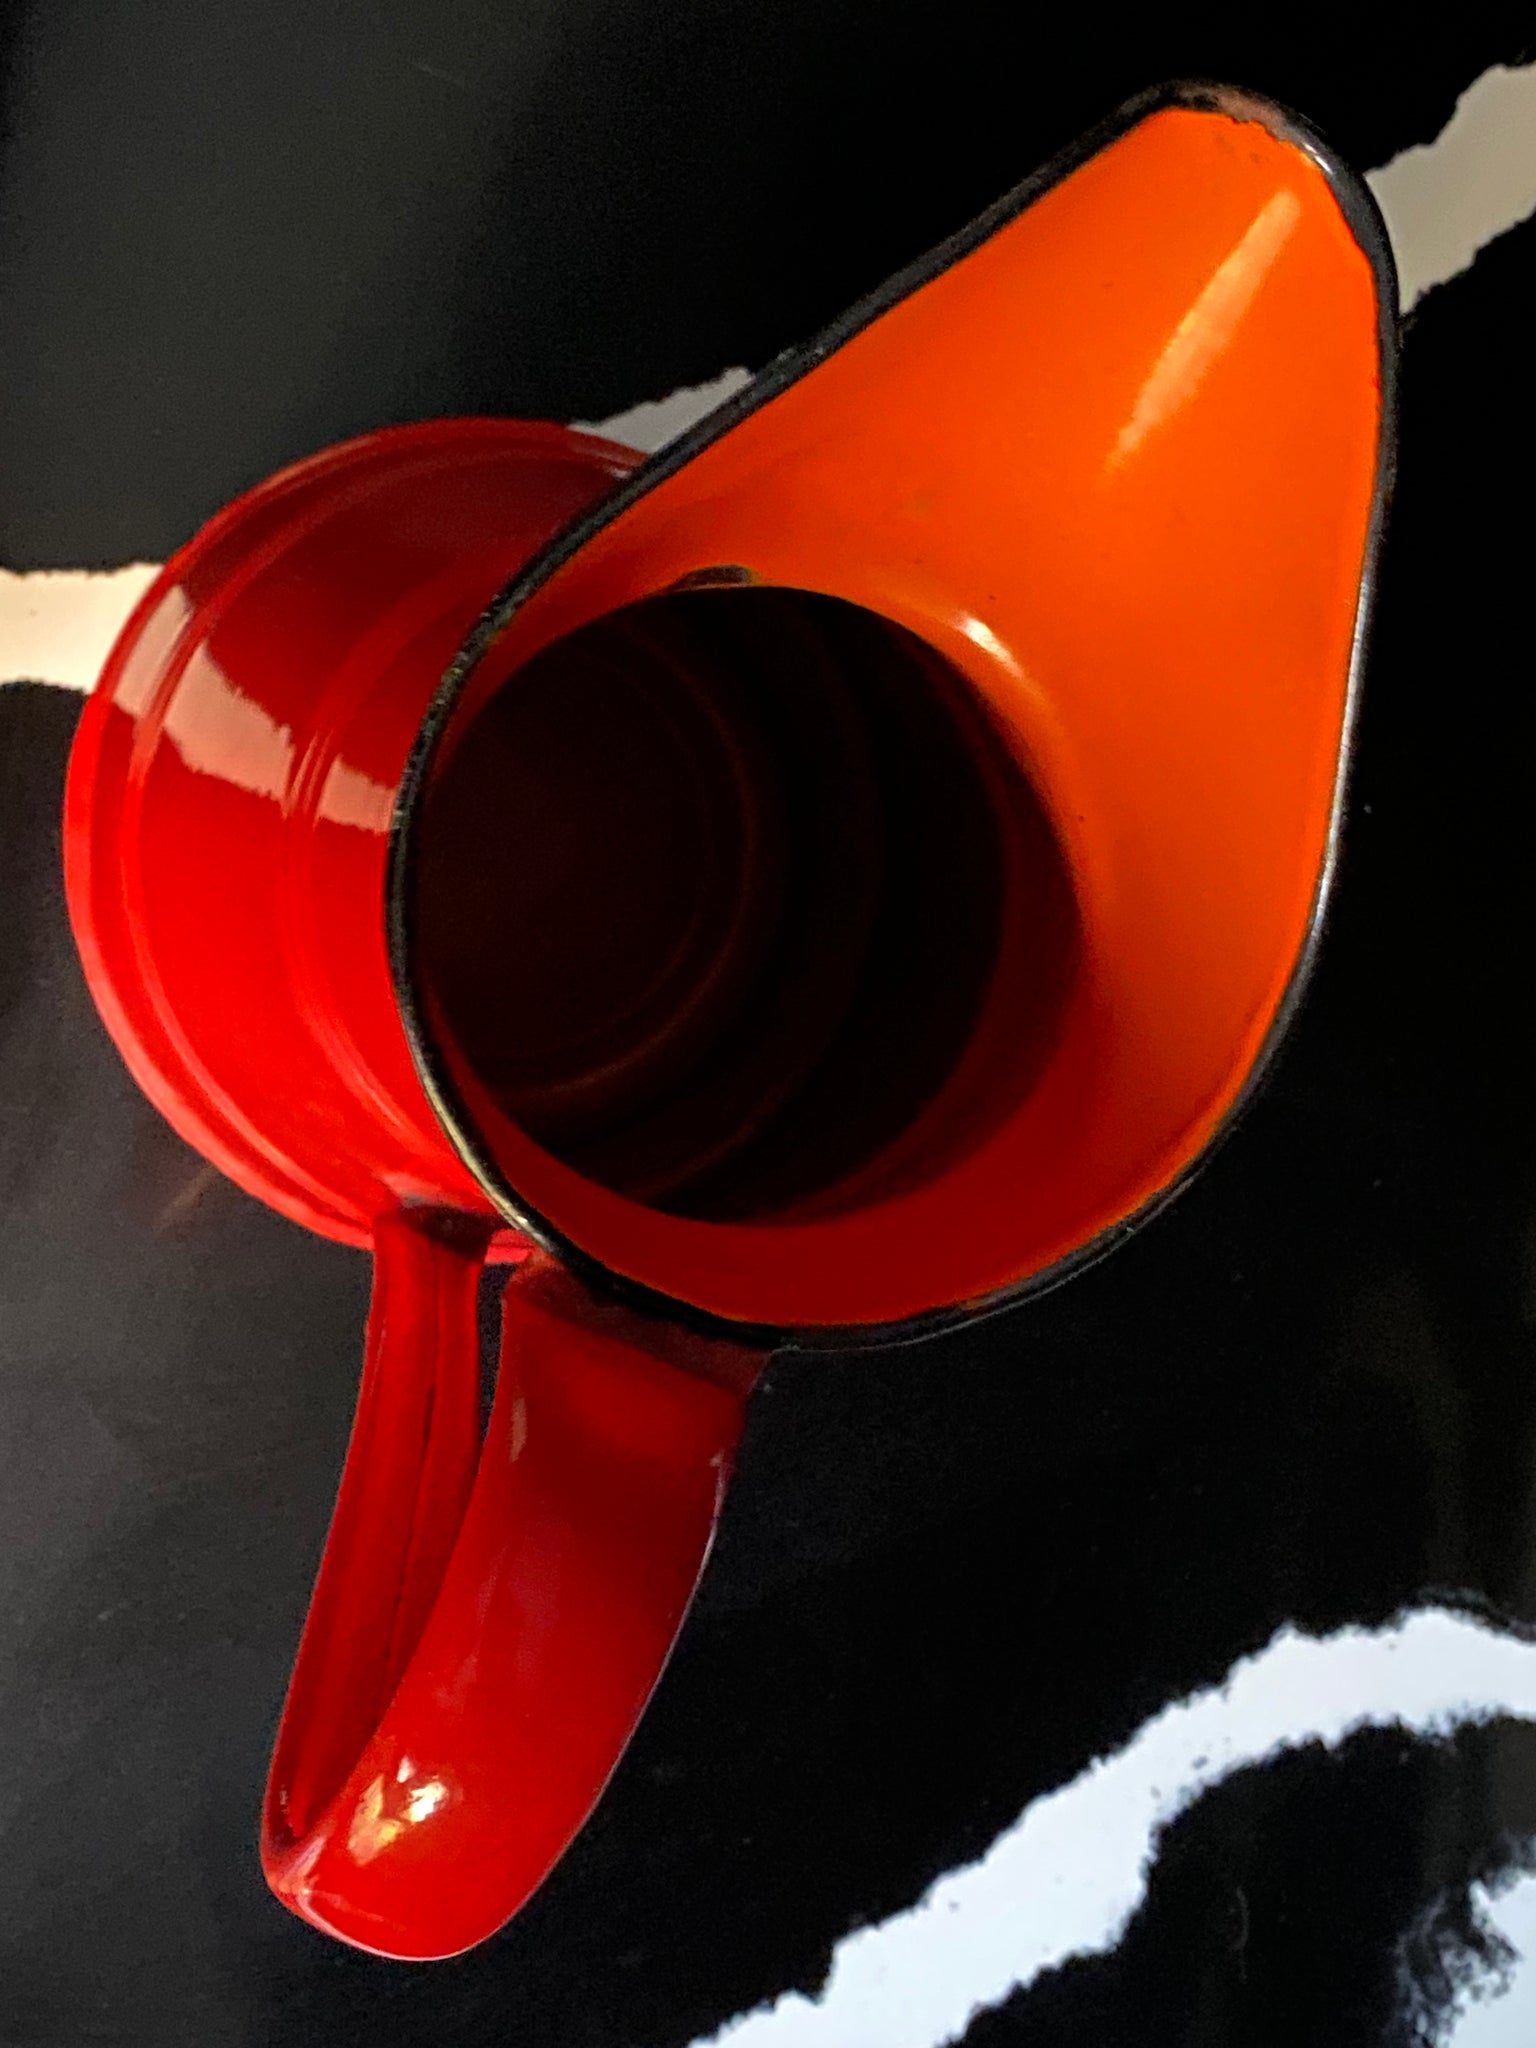 1950s red enamel pitcher Huta Silesia Made in Poland orange interior POLISH MCM